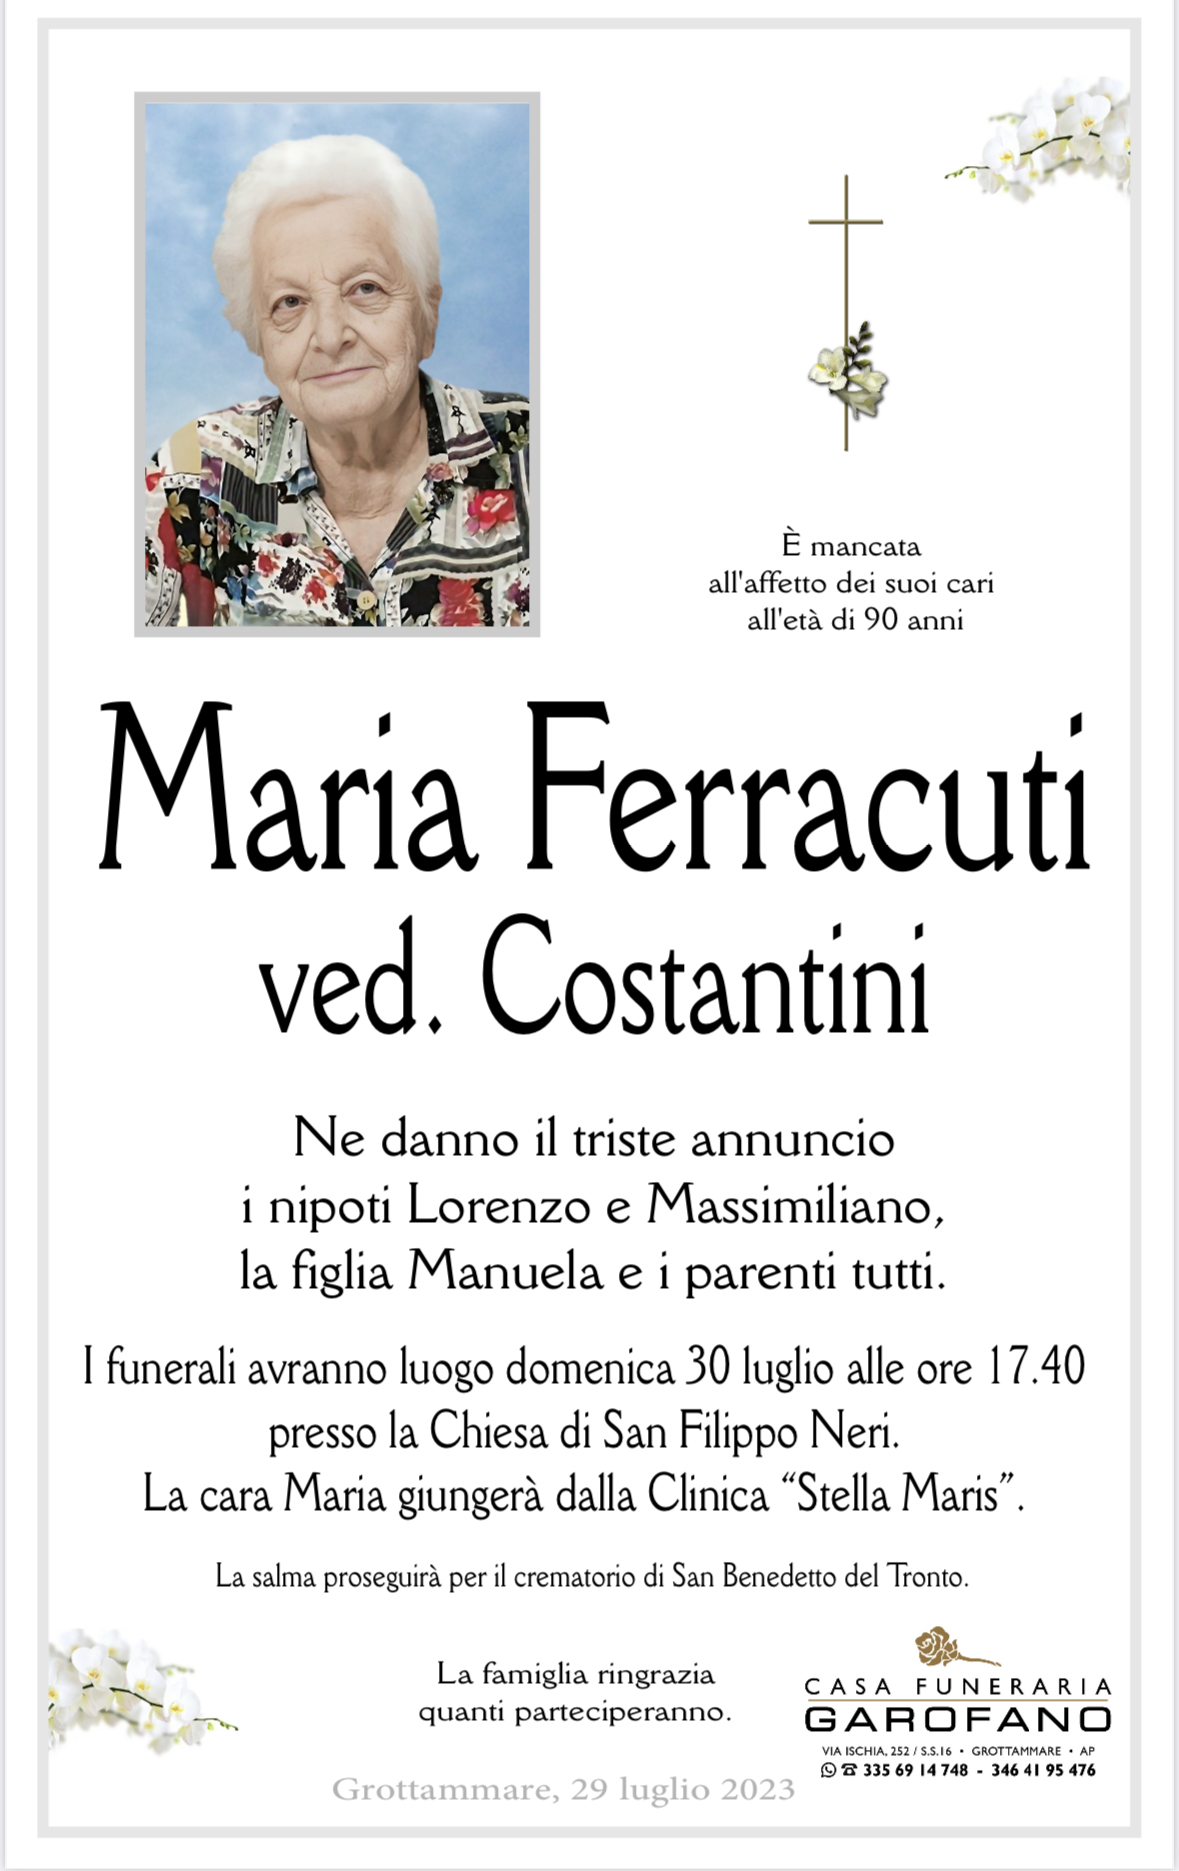 Maria Ferracuti